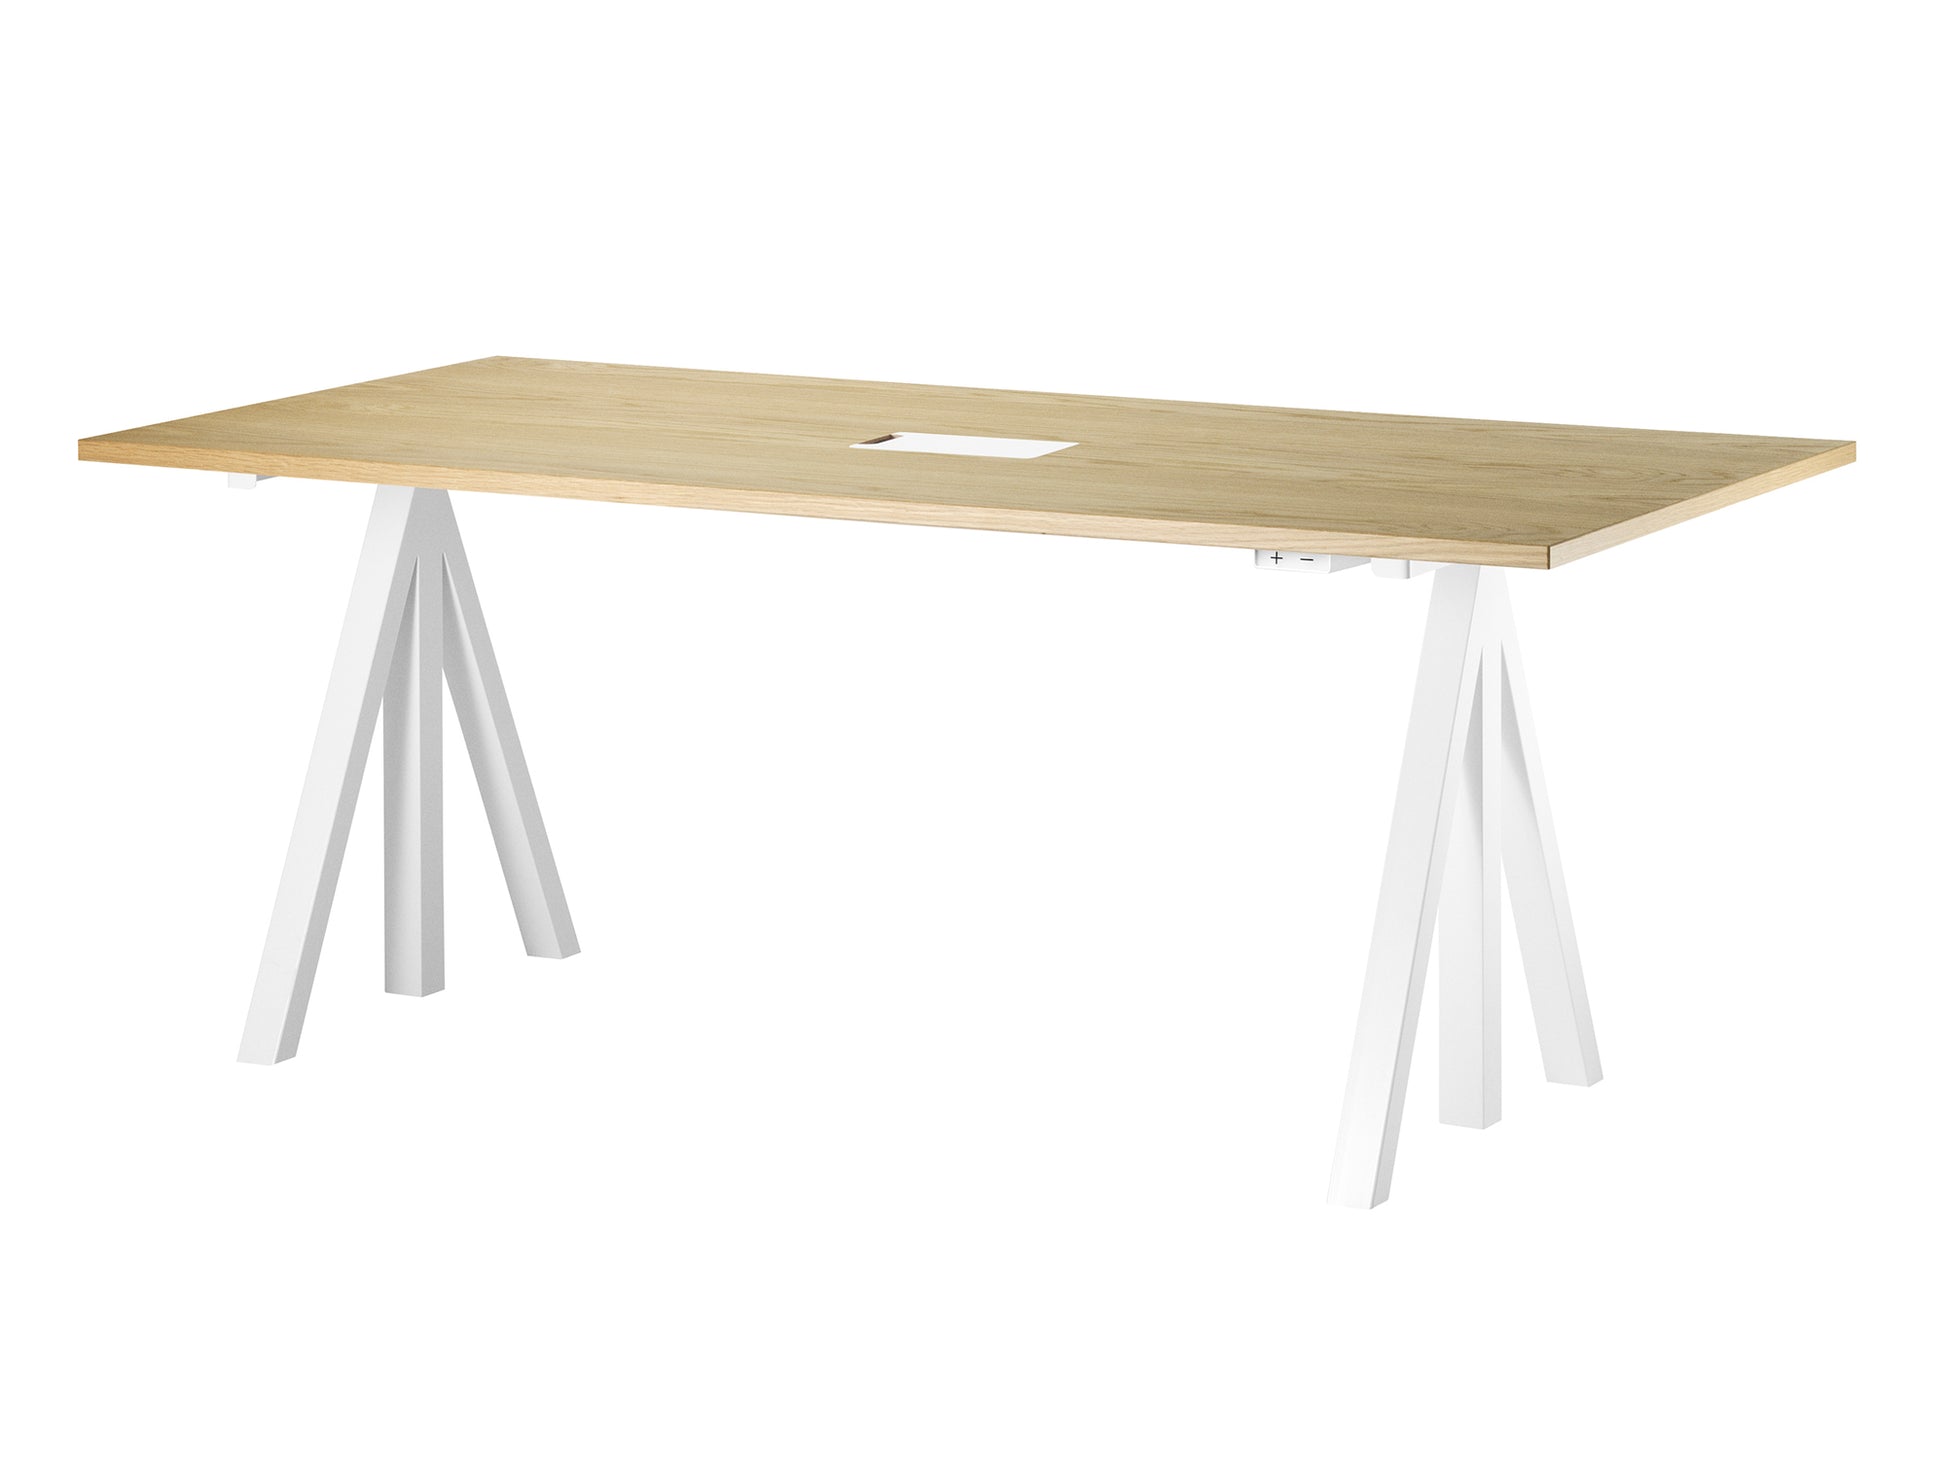 Height Adjustable Work Desk by String - 180 x 90 cm / White Steel Base / Oak Veneered MDF Desktop